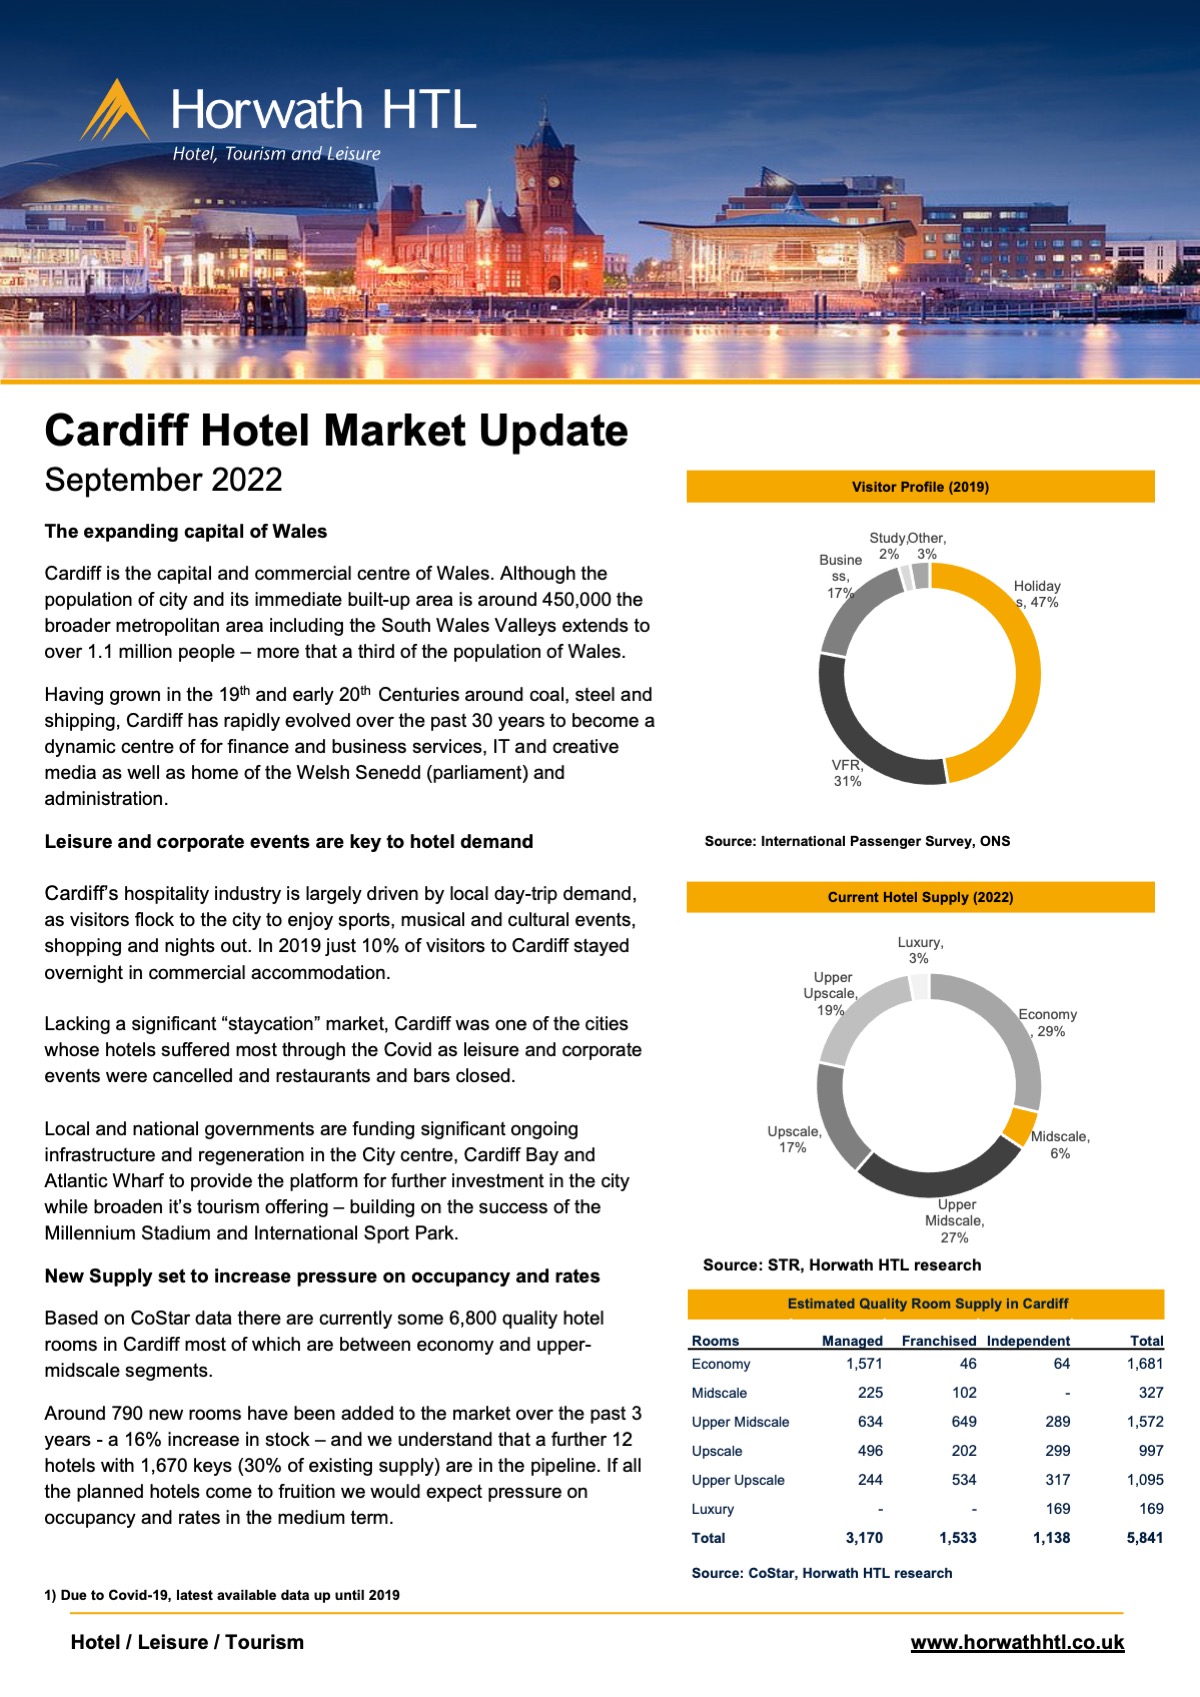 CARDIFF HTL Market Update